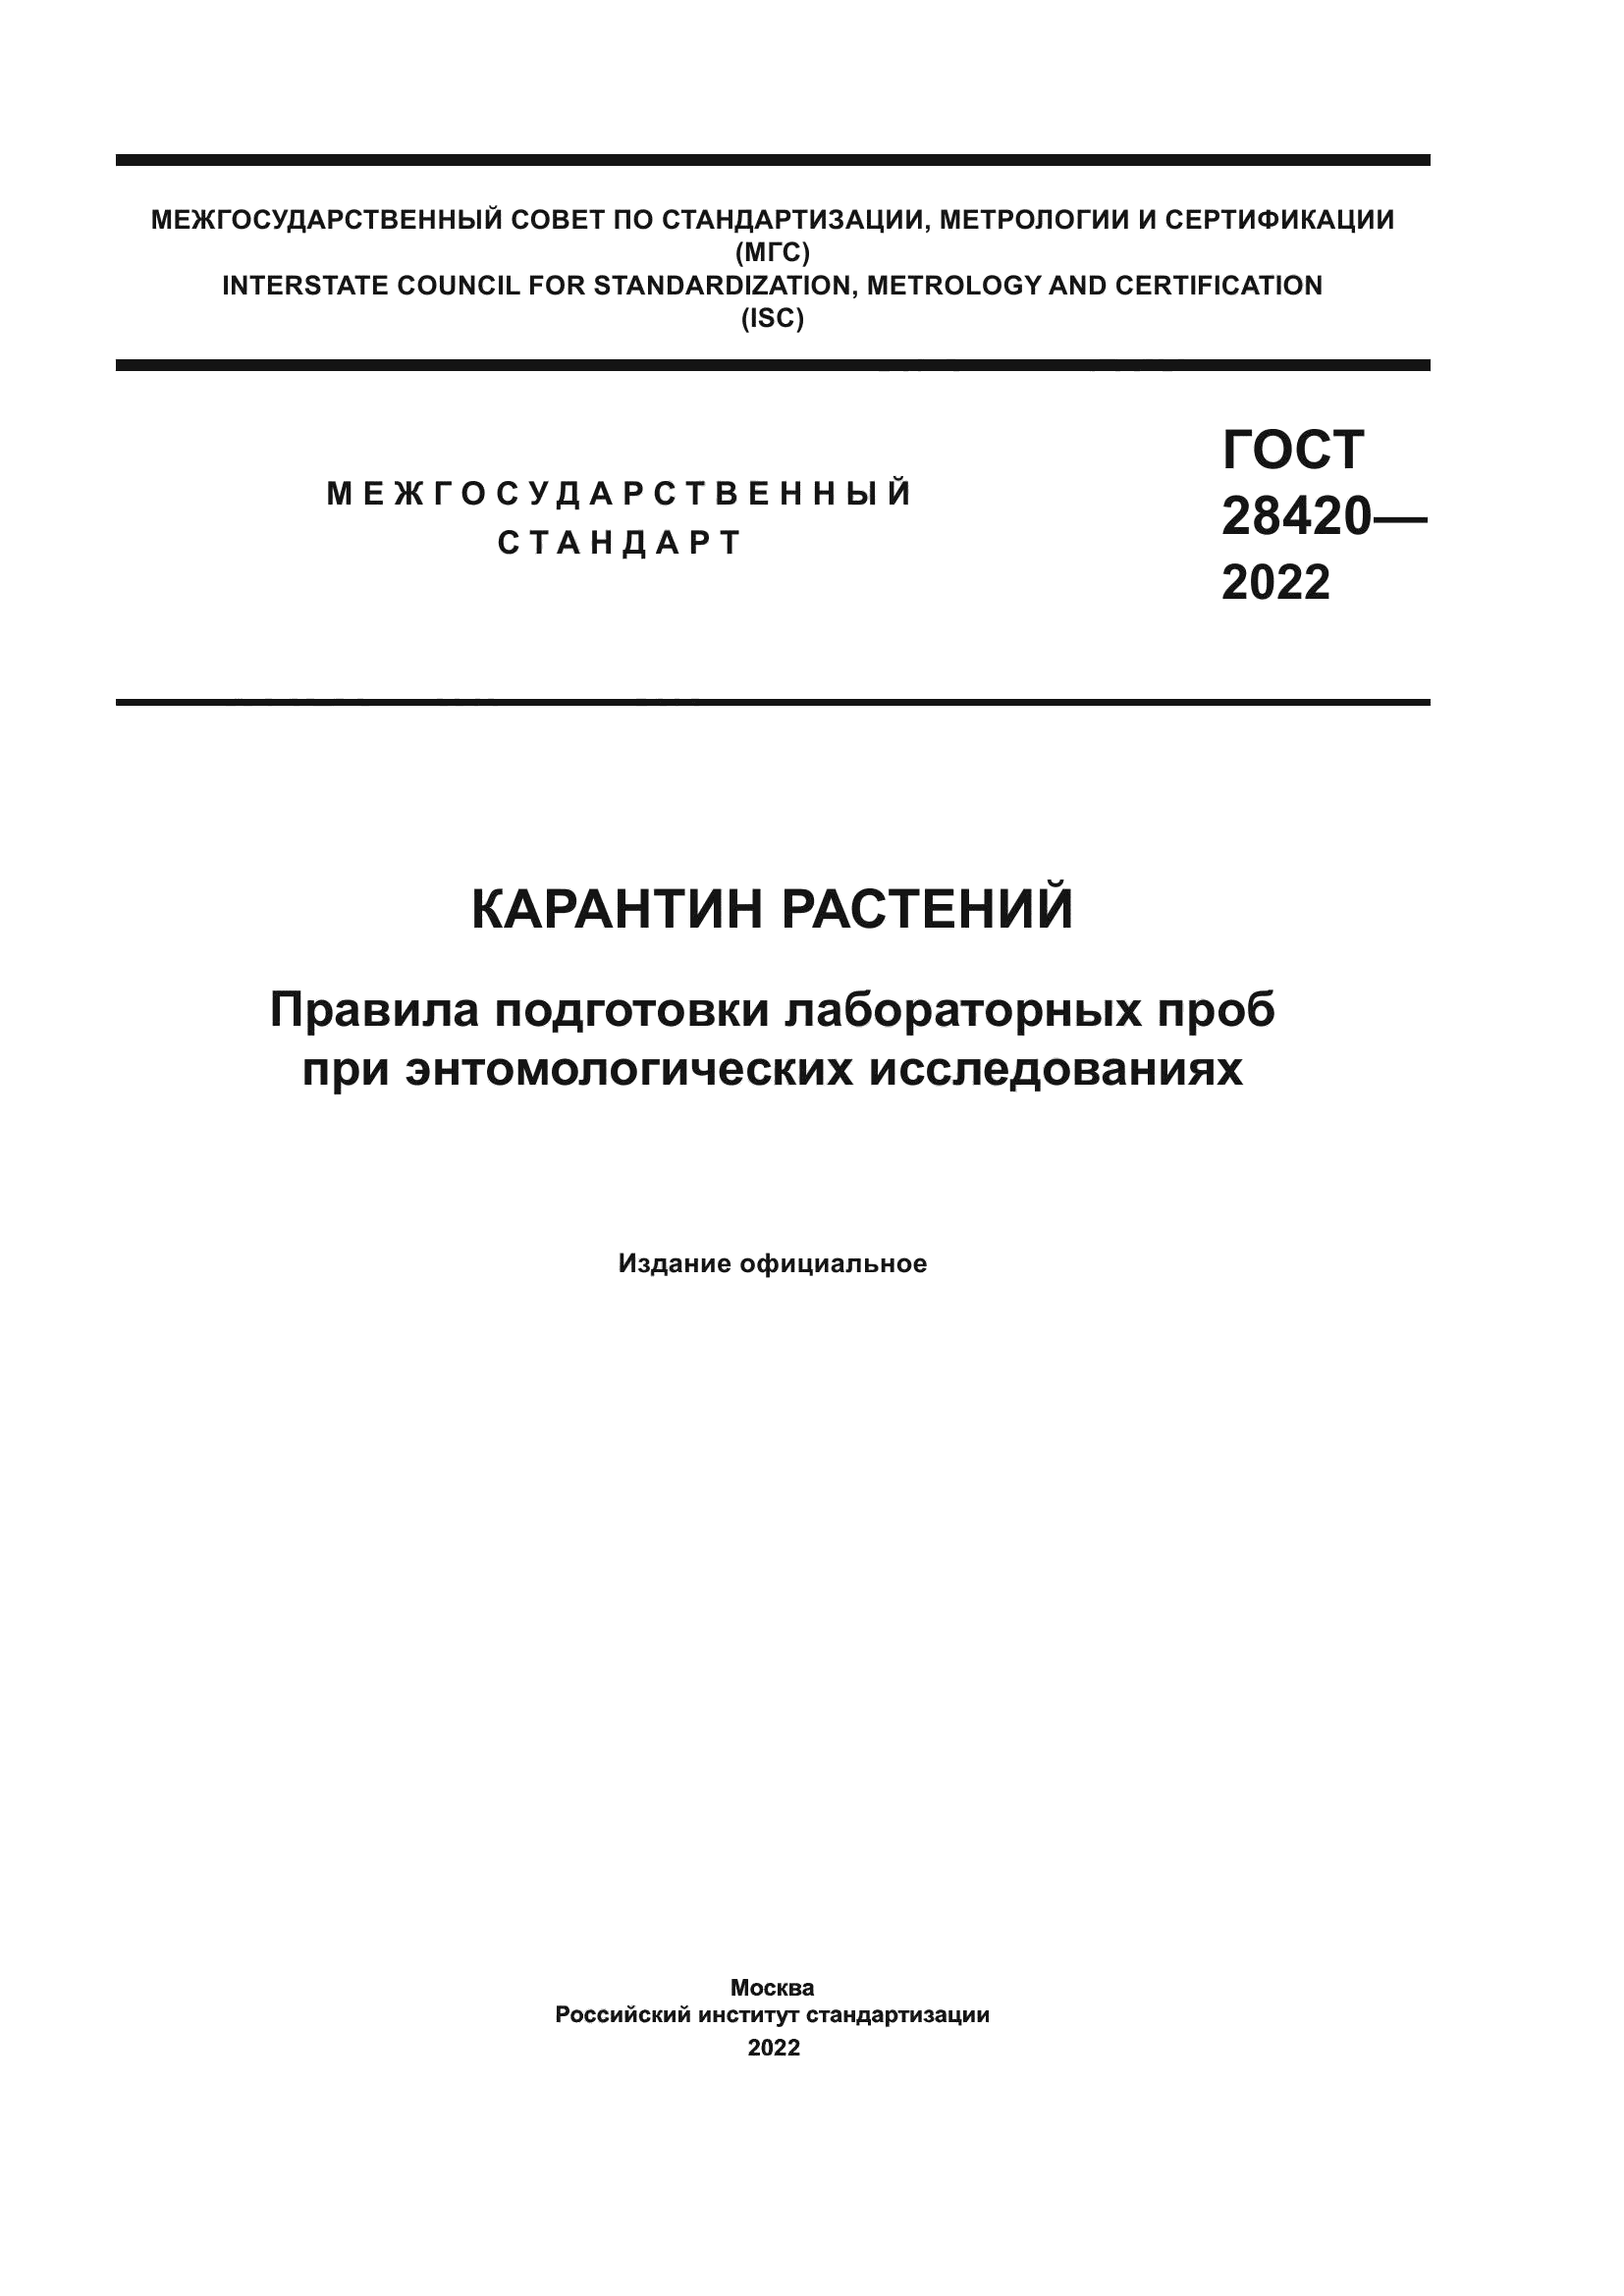 ГОСТ 28420-2022